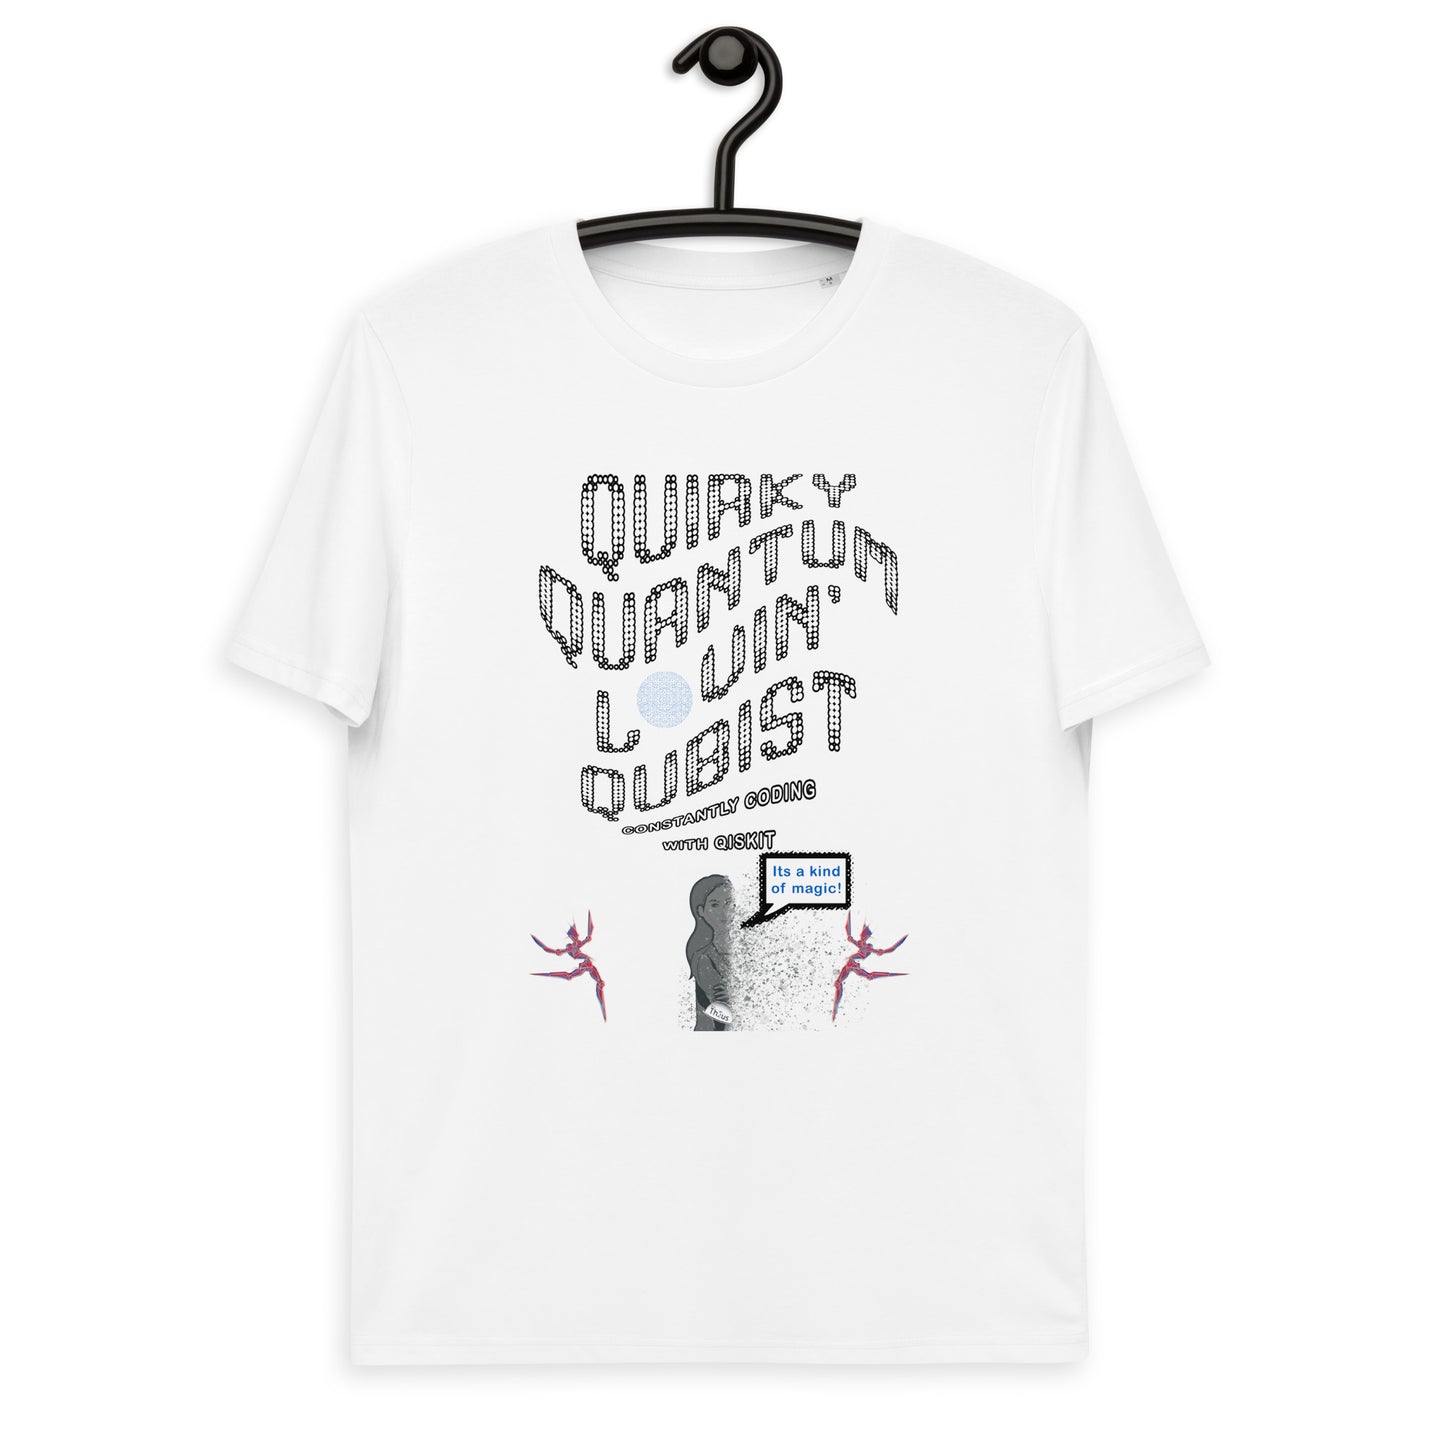 Unisex organic cotton t-shirt - Quirky Qubist Constantly Qiskit Coding F